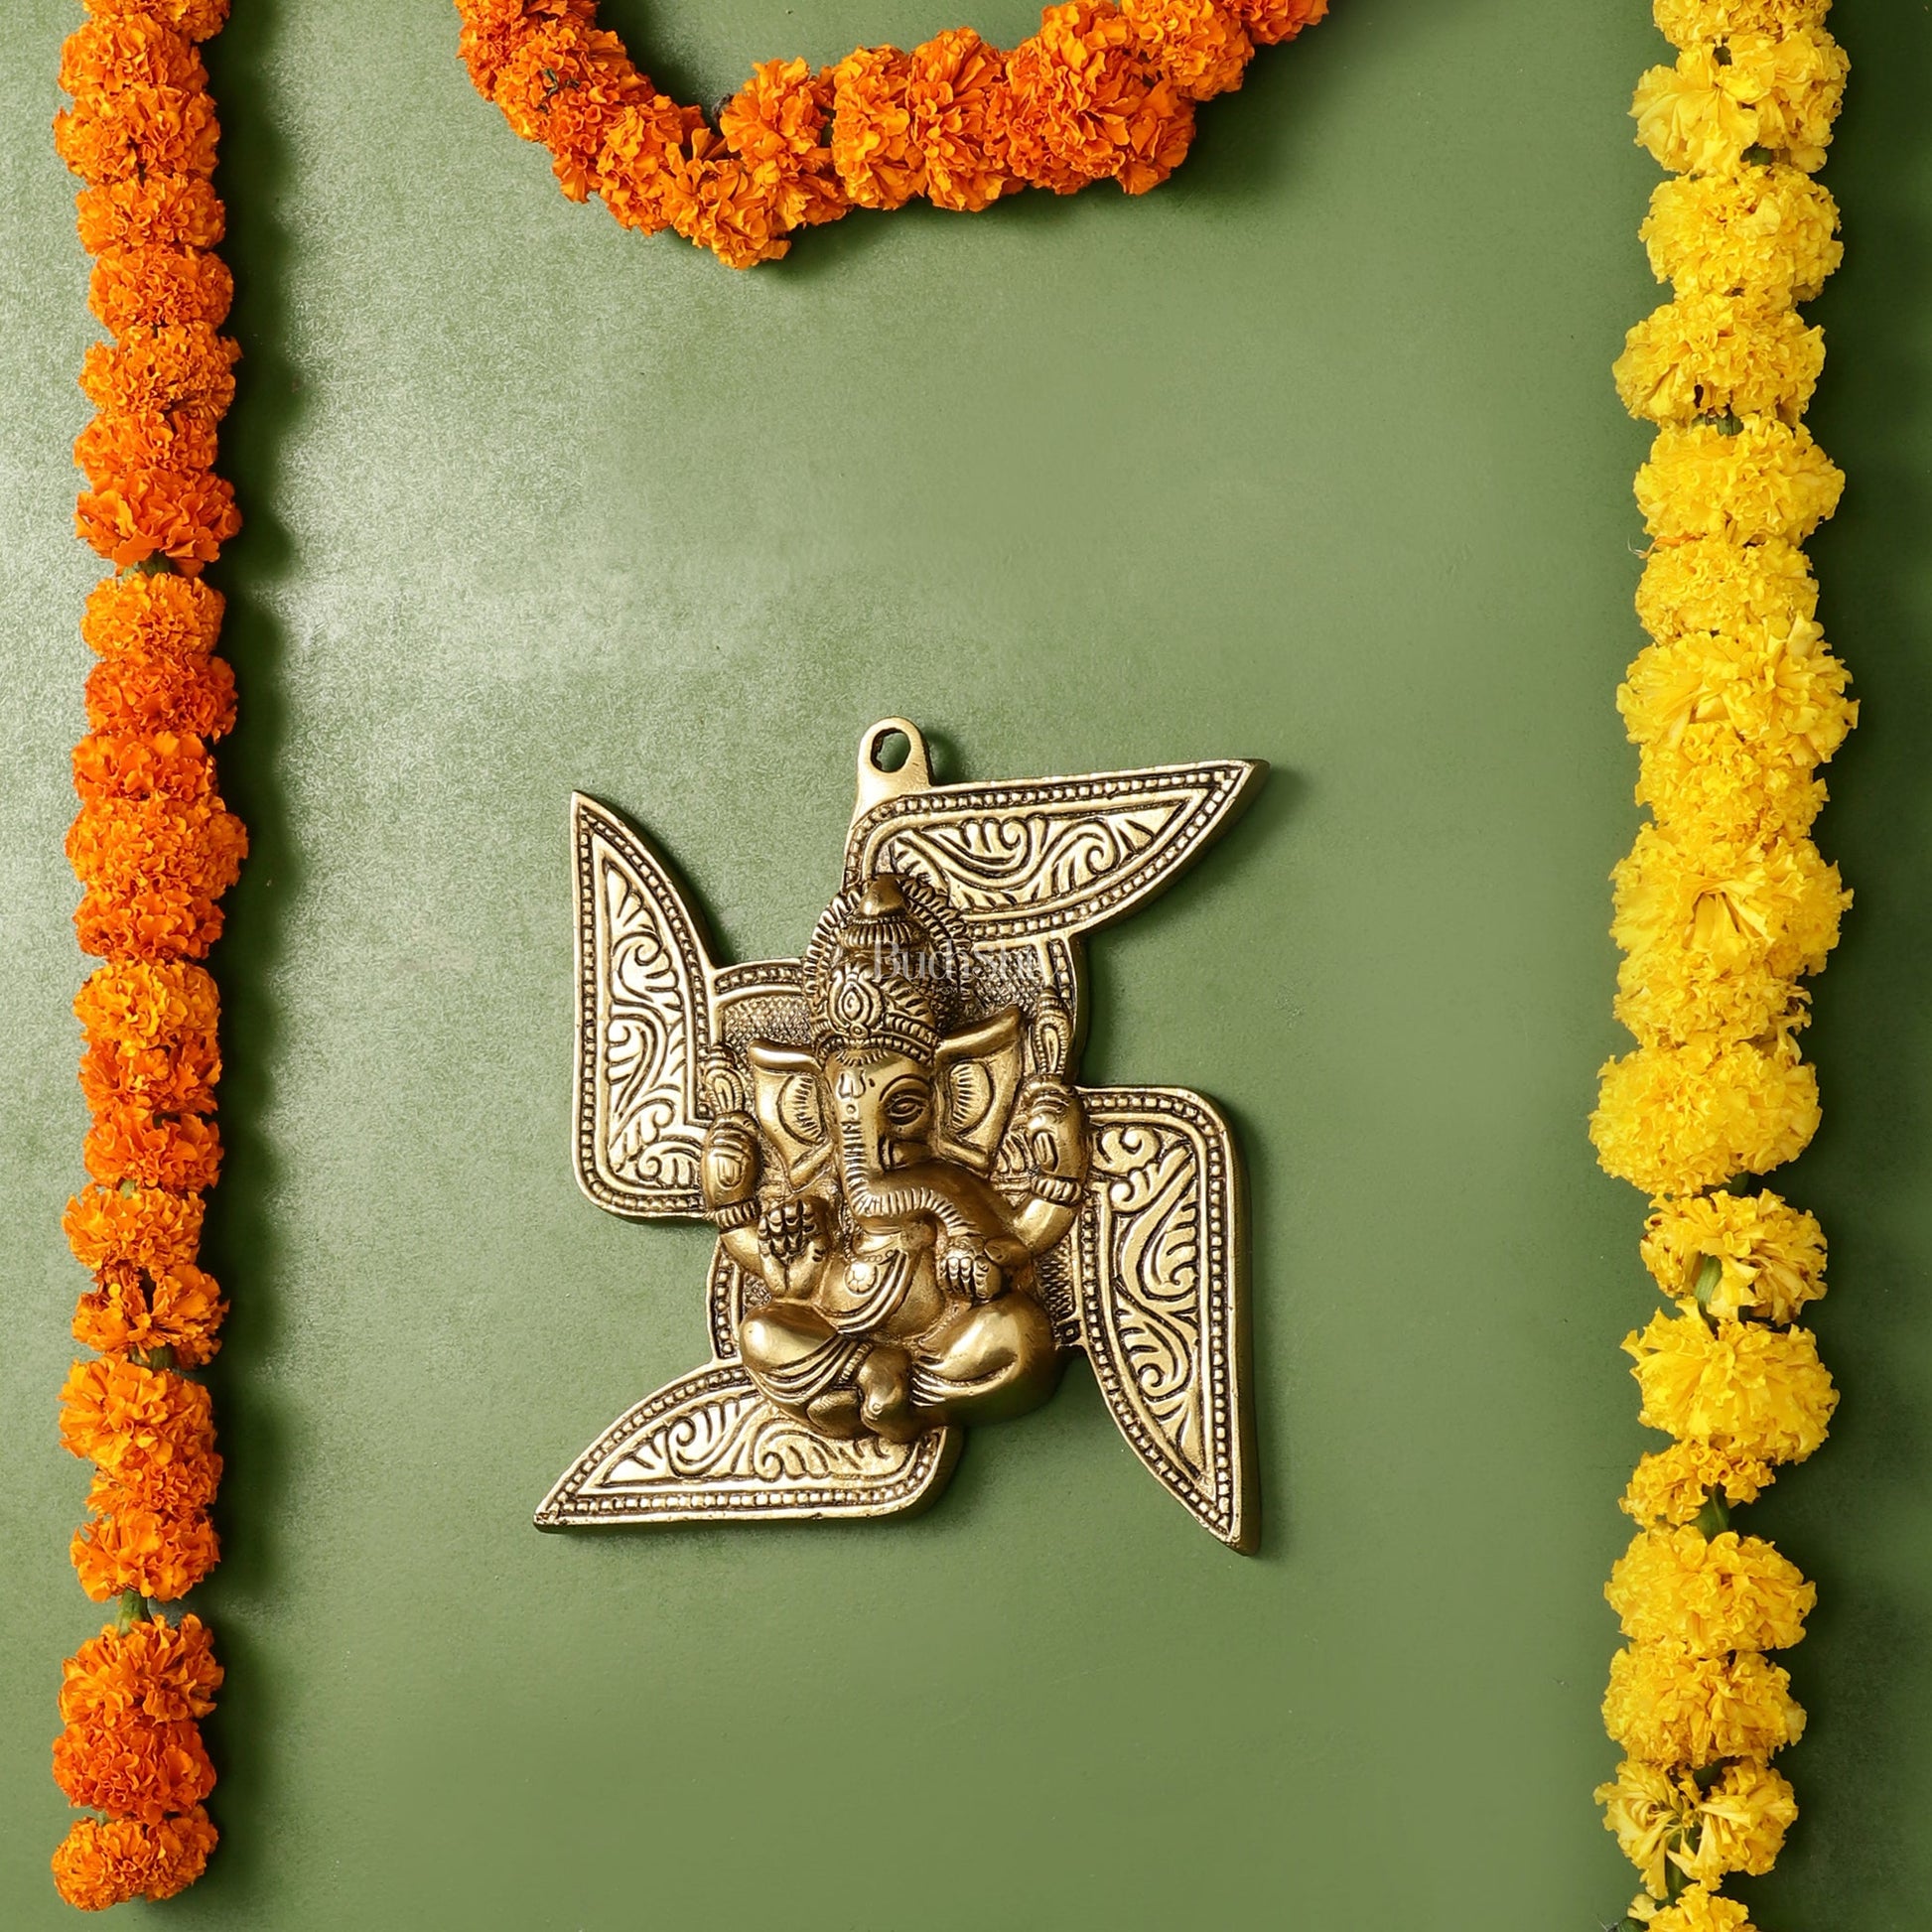 Brass Ganesha Wall Hanging on Swastik - 7 x 7 inch - Budhshiv.com